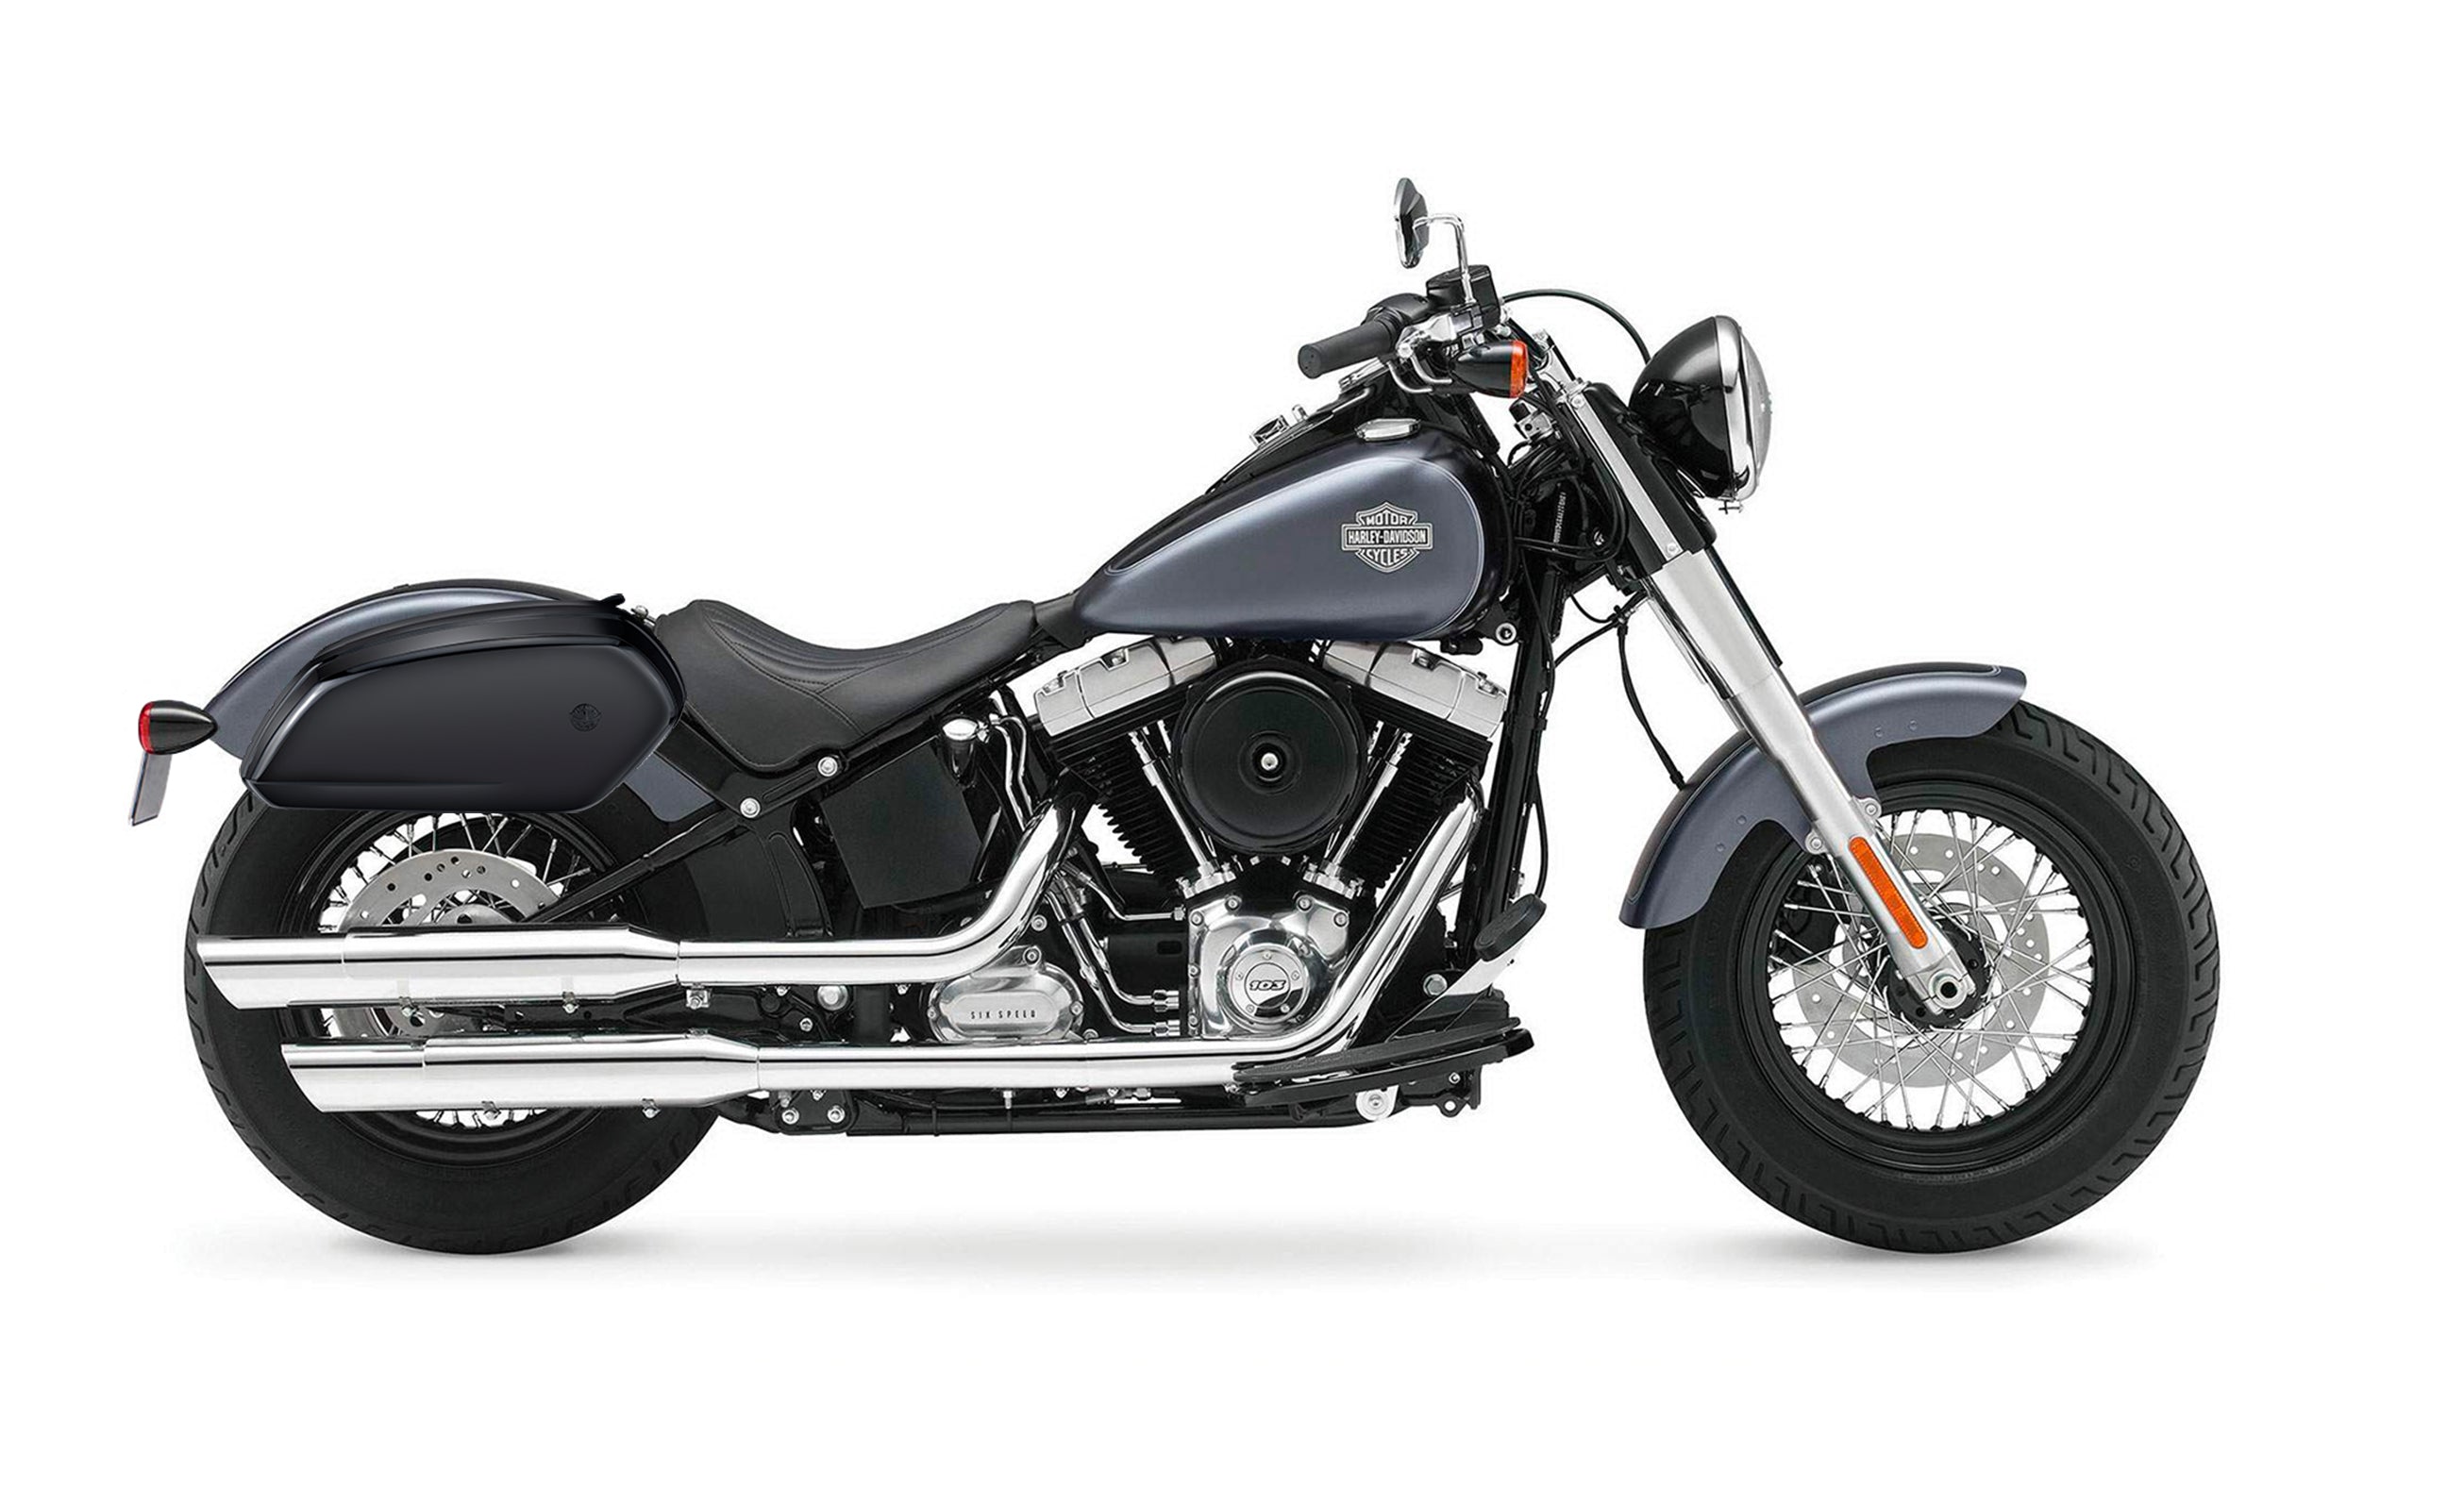 26L - Viper Large Harley Softail Slim FLS Painted Motorcycle Hard Saddlebags on Bike Photo @expand